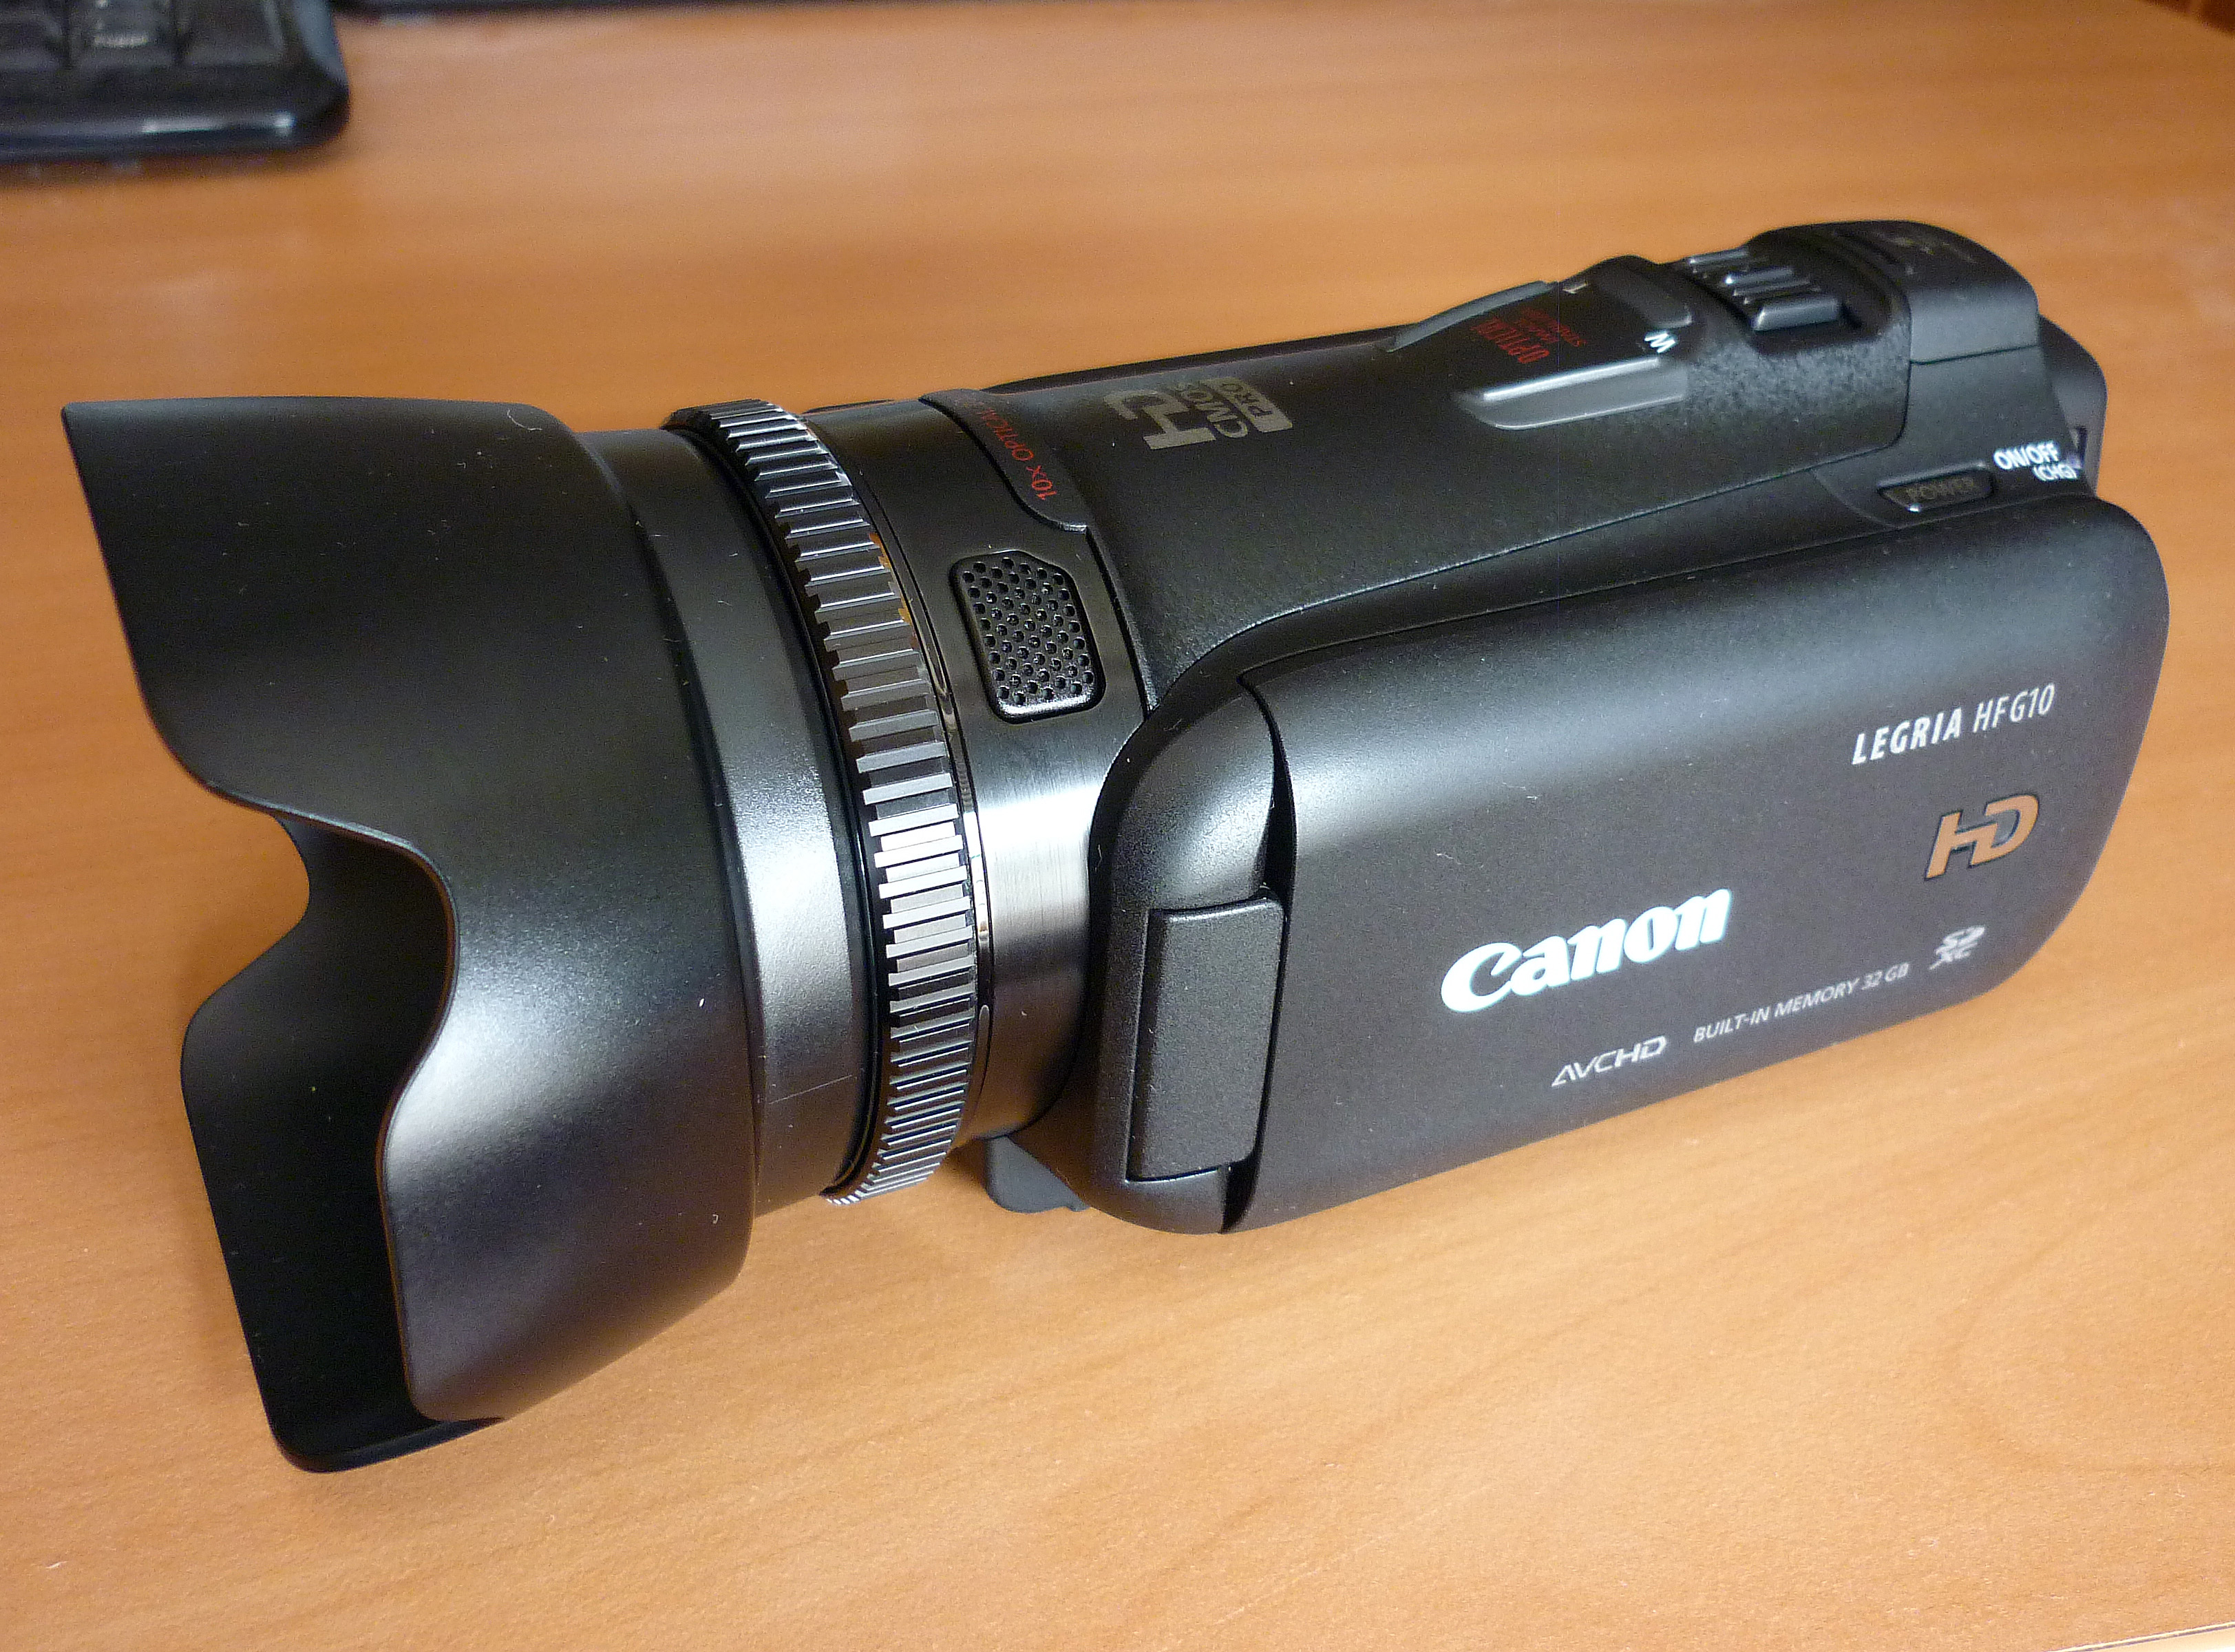 File:Canon Legria HF-G10 AVCHD Camcorder.jpg - Wikimedia Commons